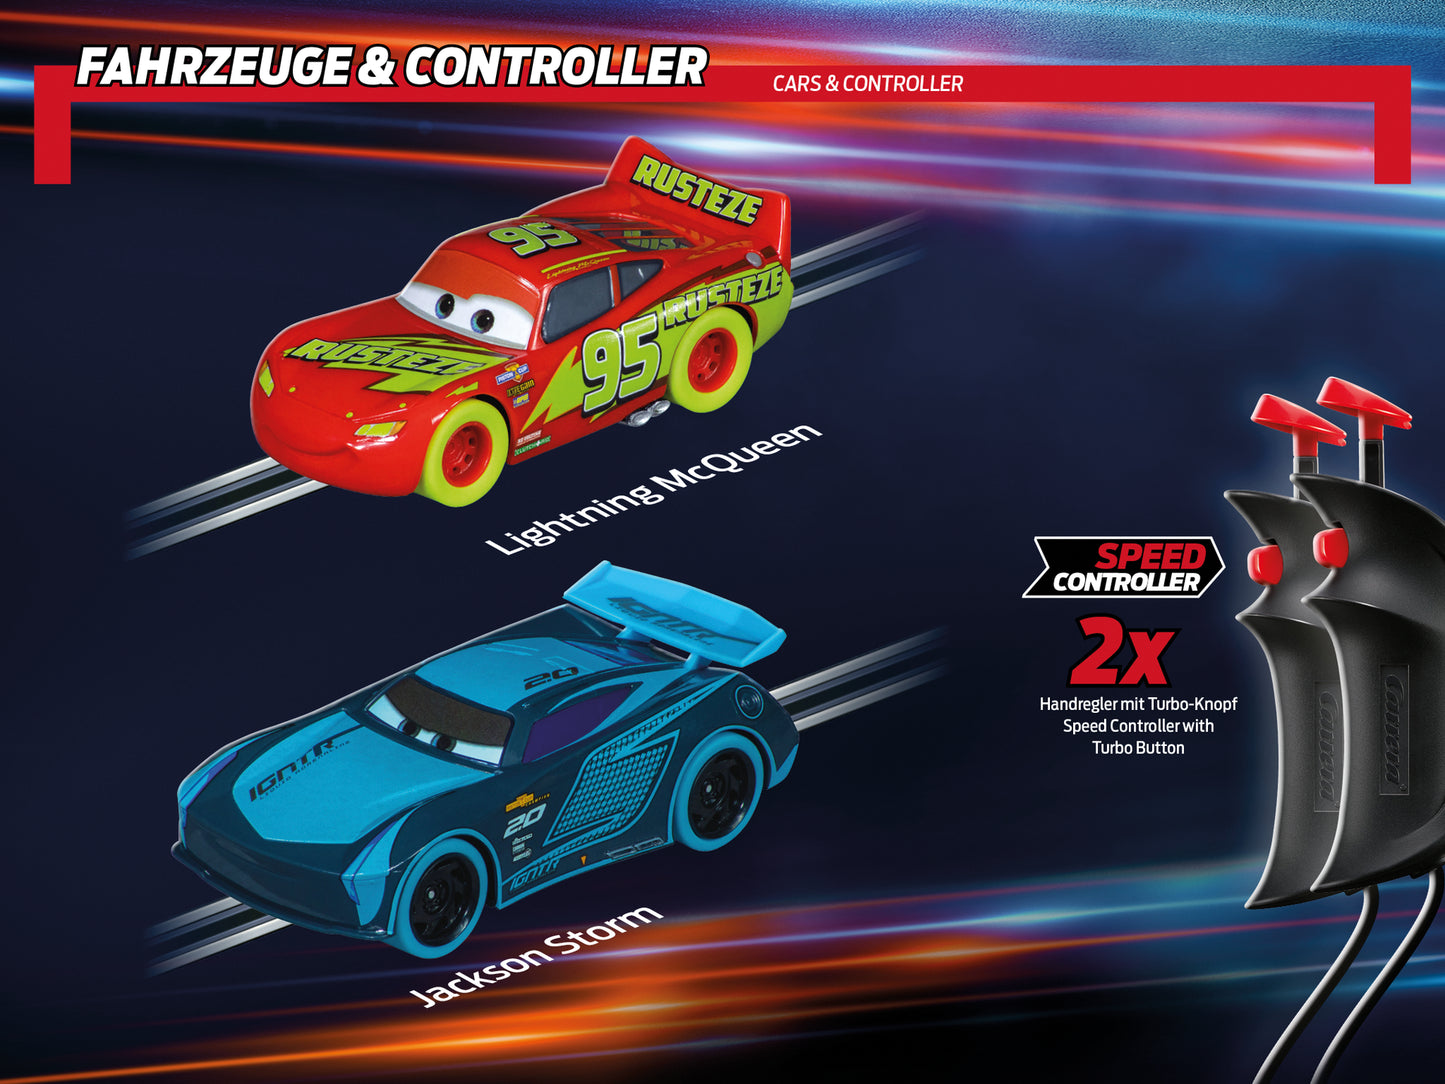 Carrera Go !!! Disney·Pixar Cars - Glow Racers